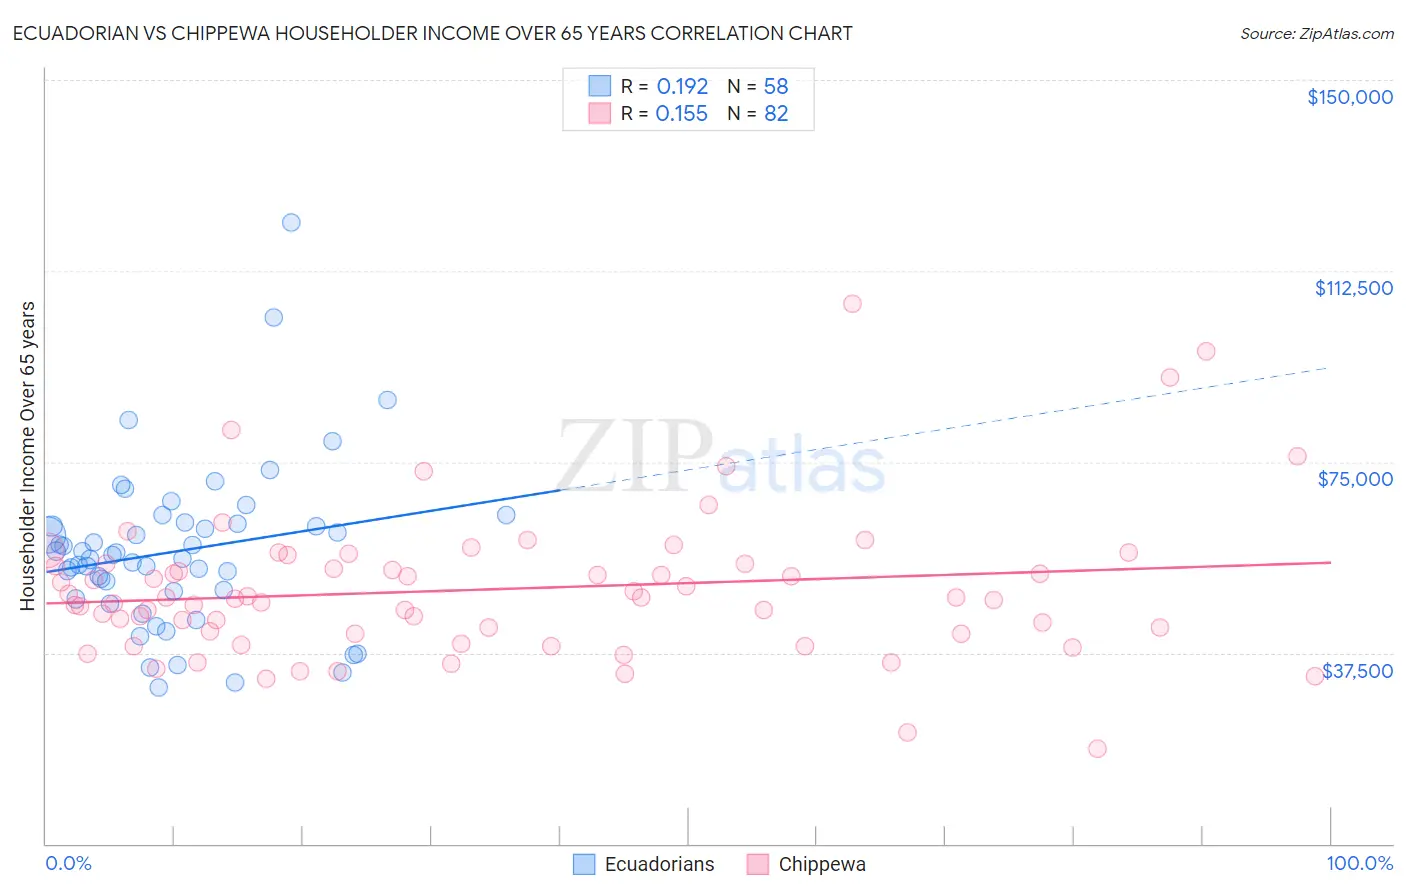 Ecuadorian vs Chippewa Householder Income Over 65 years